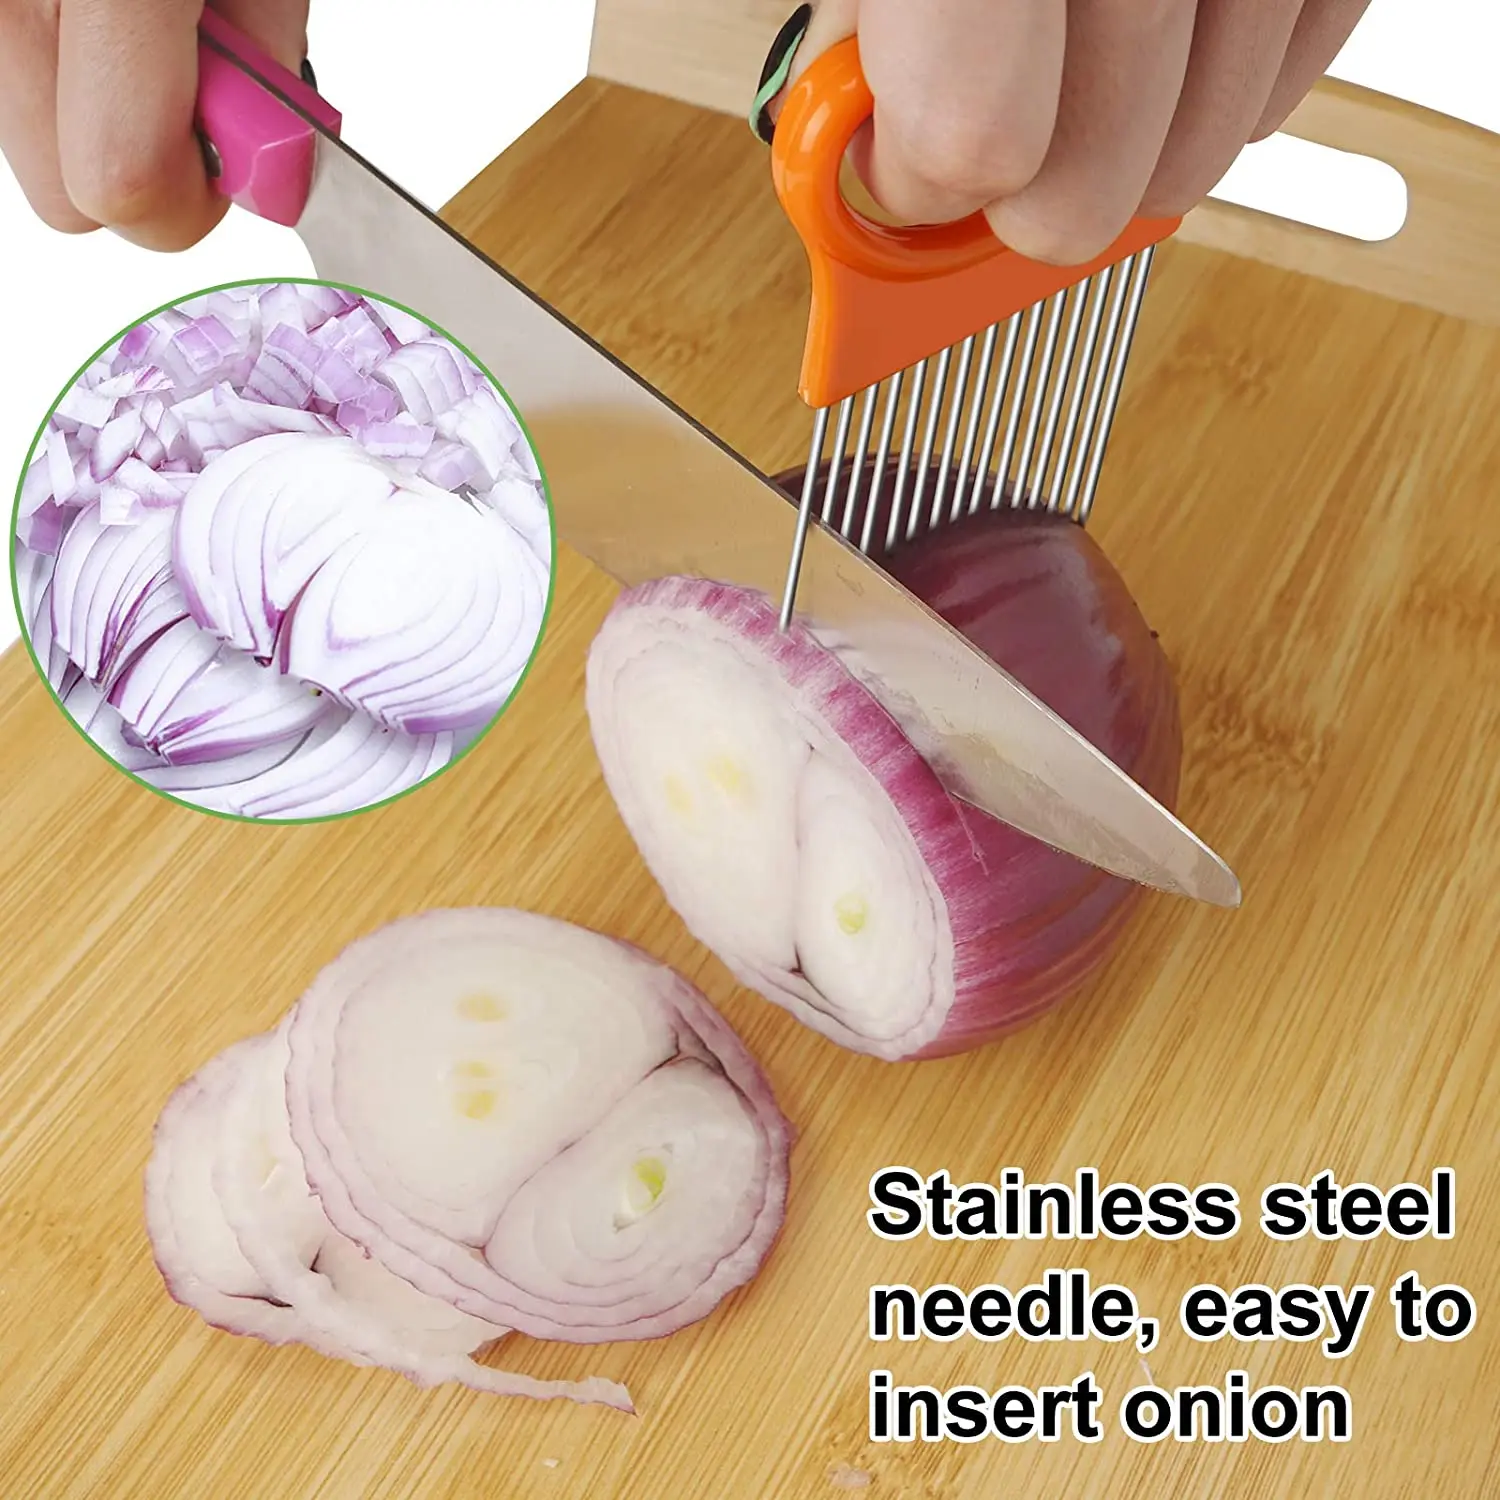 https://ae01.alicdn.com/kf/A655b9d9776a9437a9aae3672e479b854J/3pc-Stainless-Steel-Onion-Needle-Fork-Vegetable-Fruit-Slicer-Tomato-Potato-Cutter-Cutting-Safe-Aid-Holder.jpg